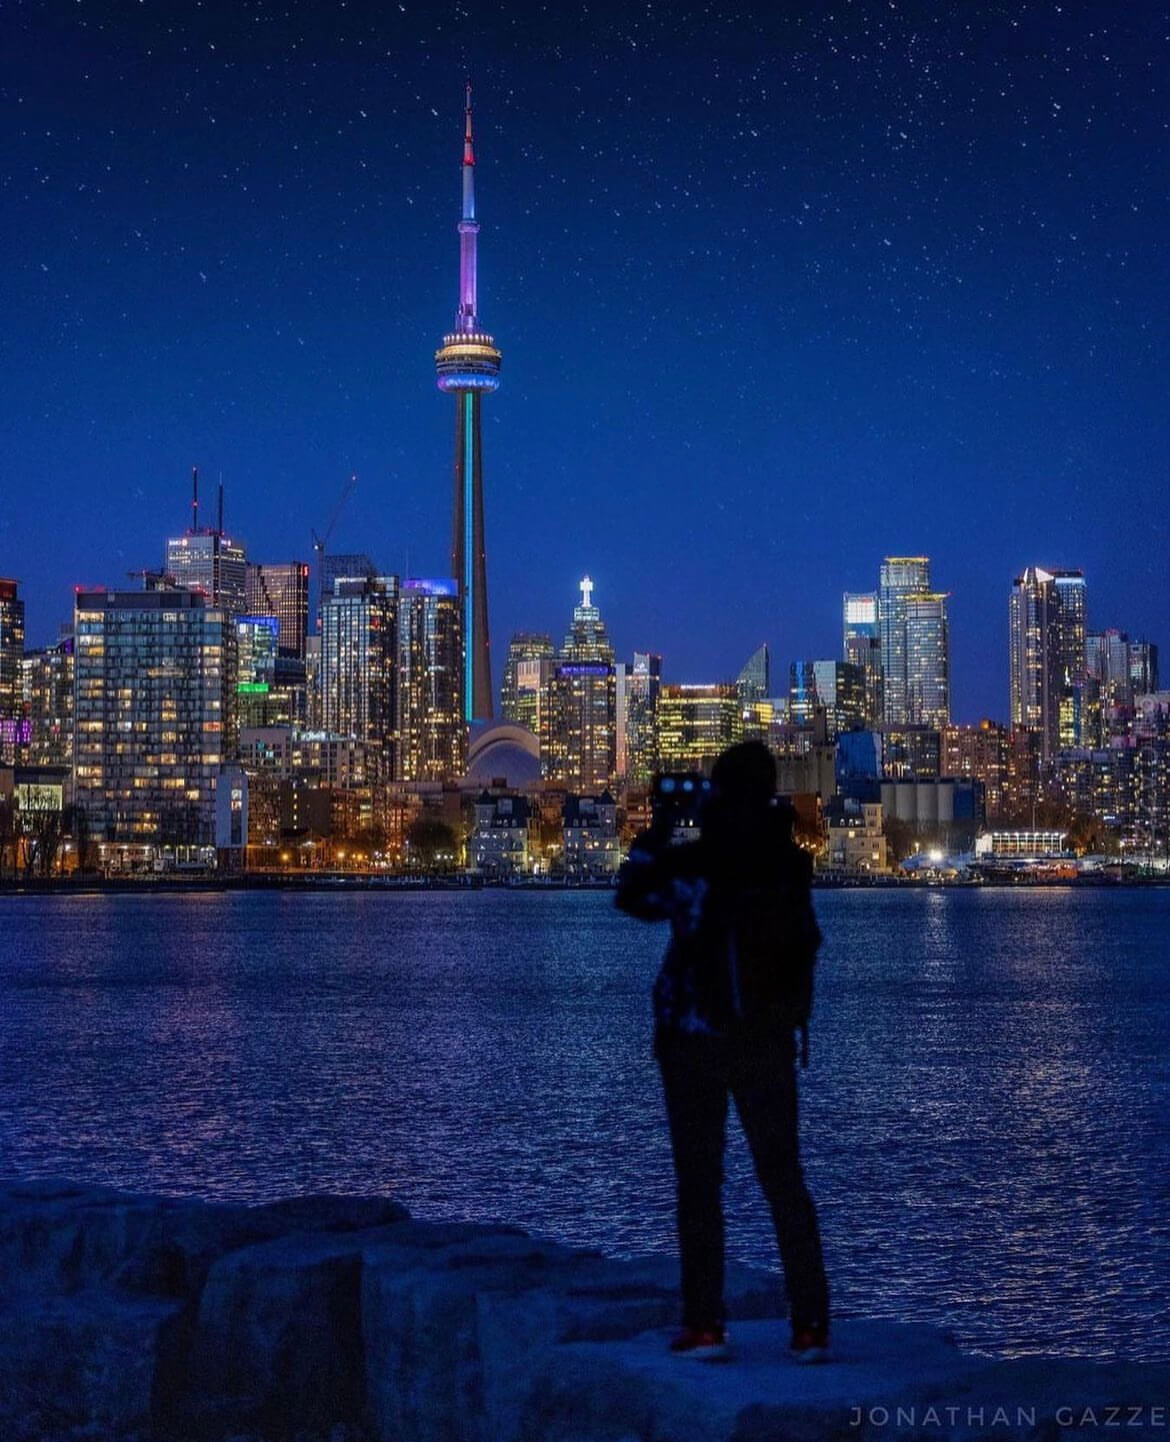 The city lights of Toronto, Canada.